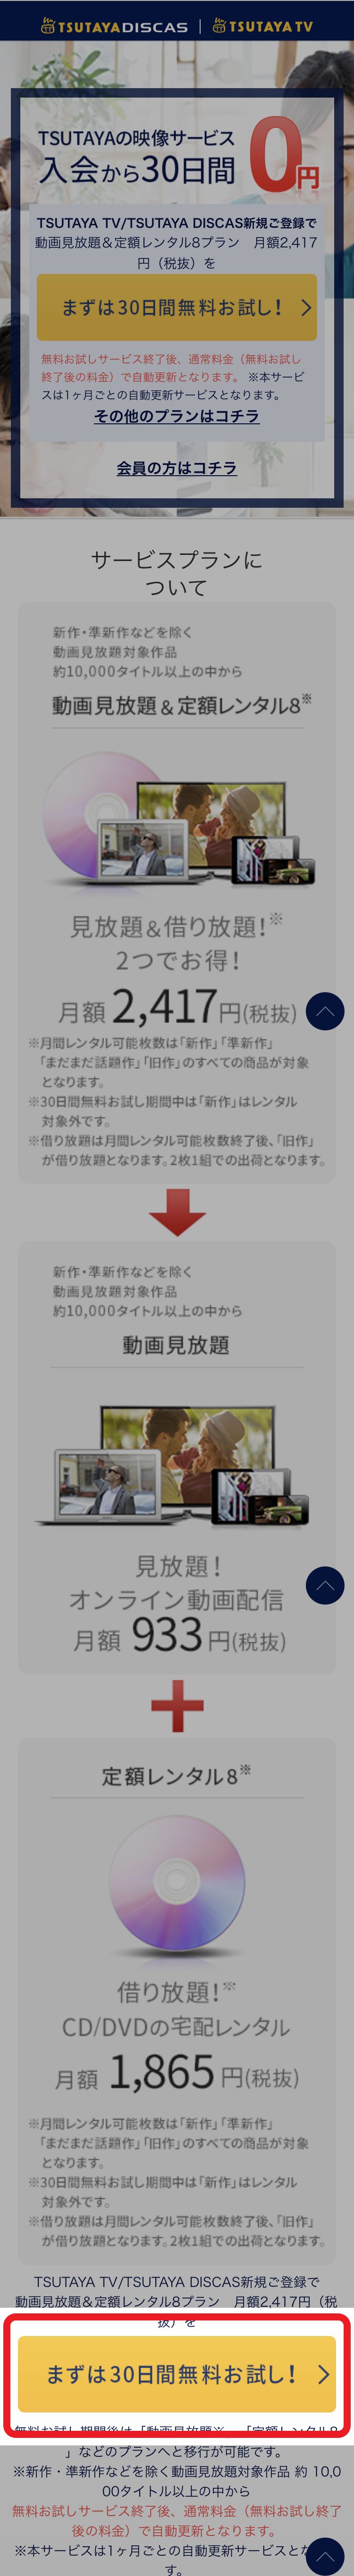 Tsutaya Tvの無料お試しをする時の登録方法を詳しく 簡単すぐに視聴開始できる マリエのドラマ映画エンタメ通信